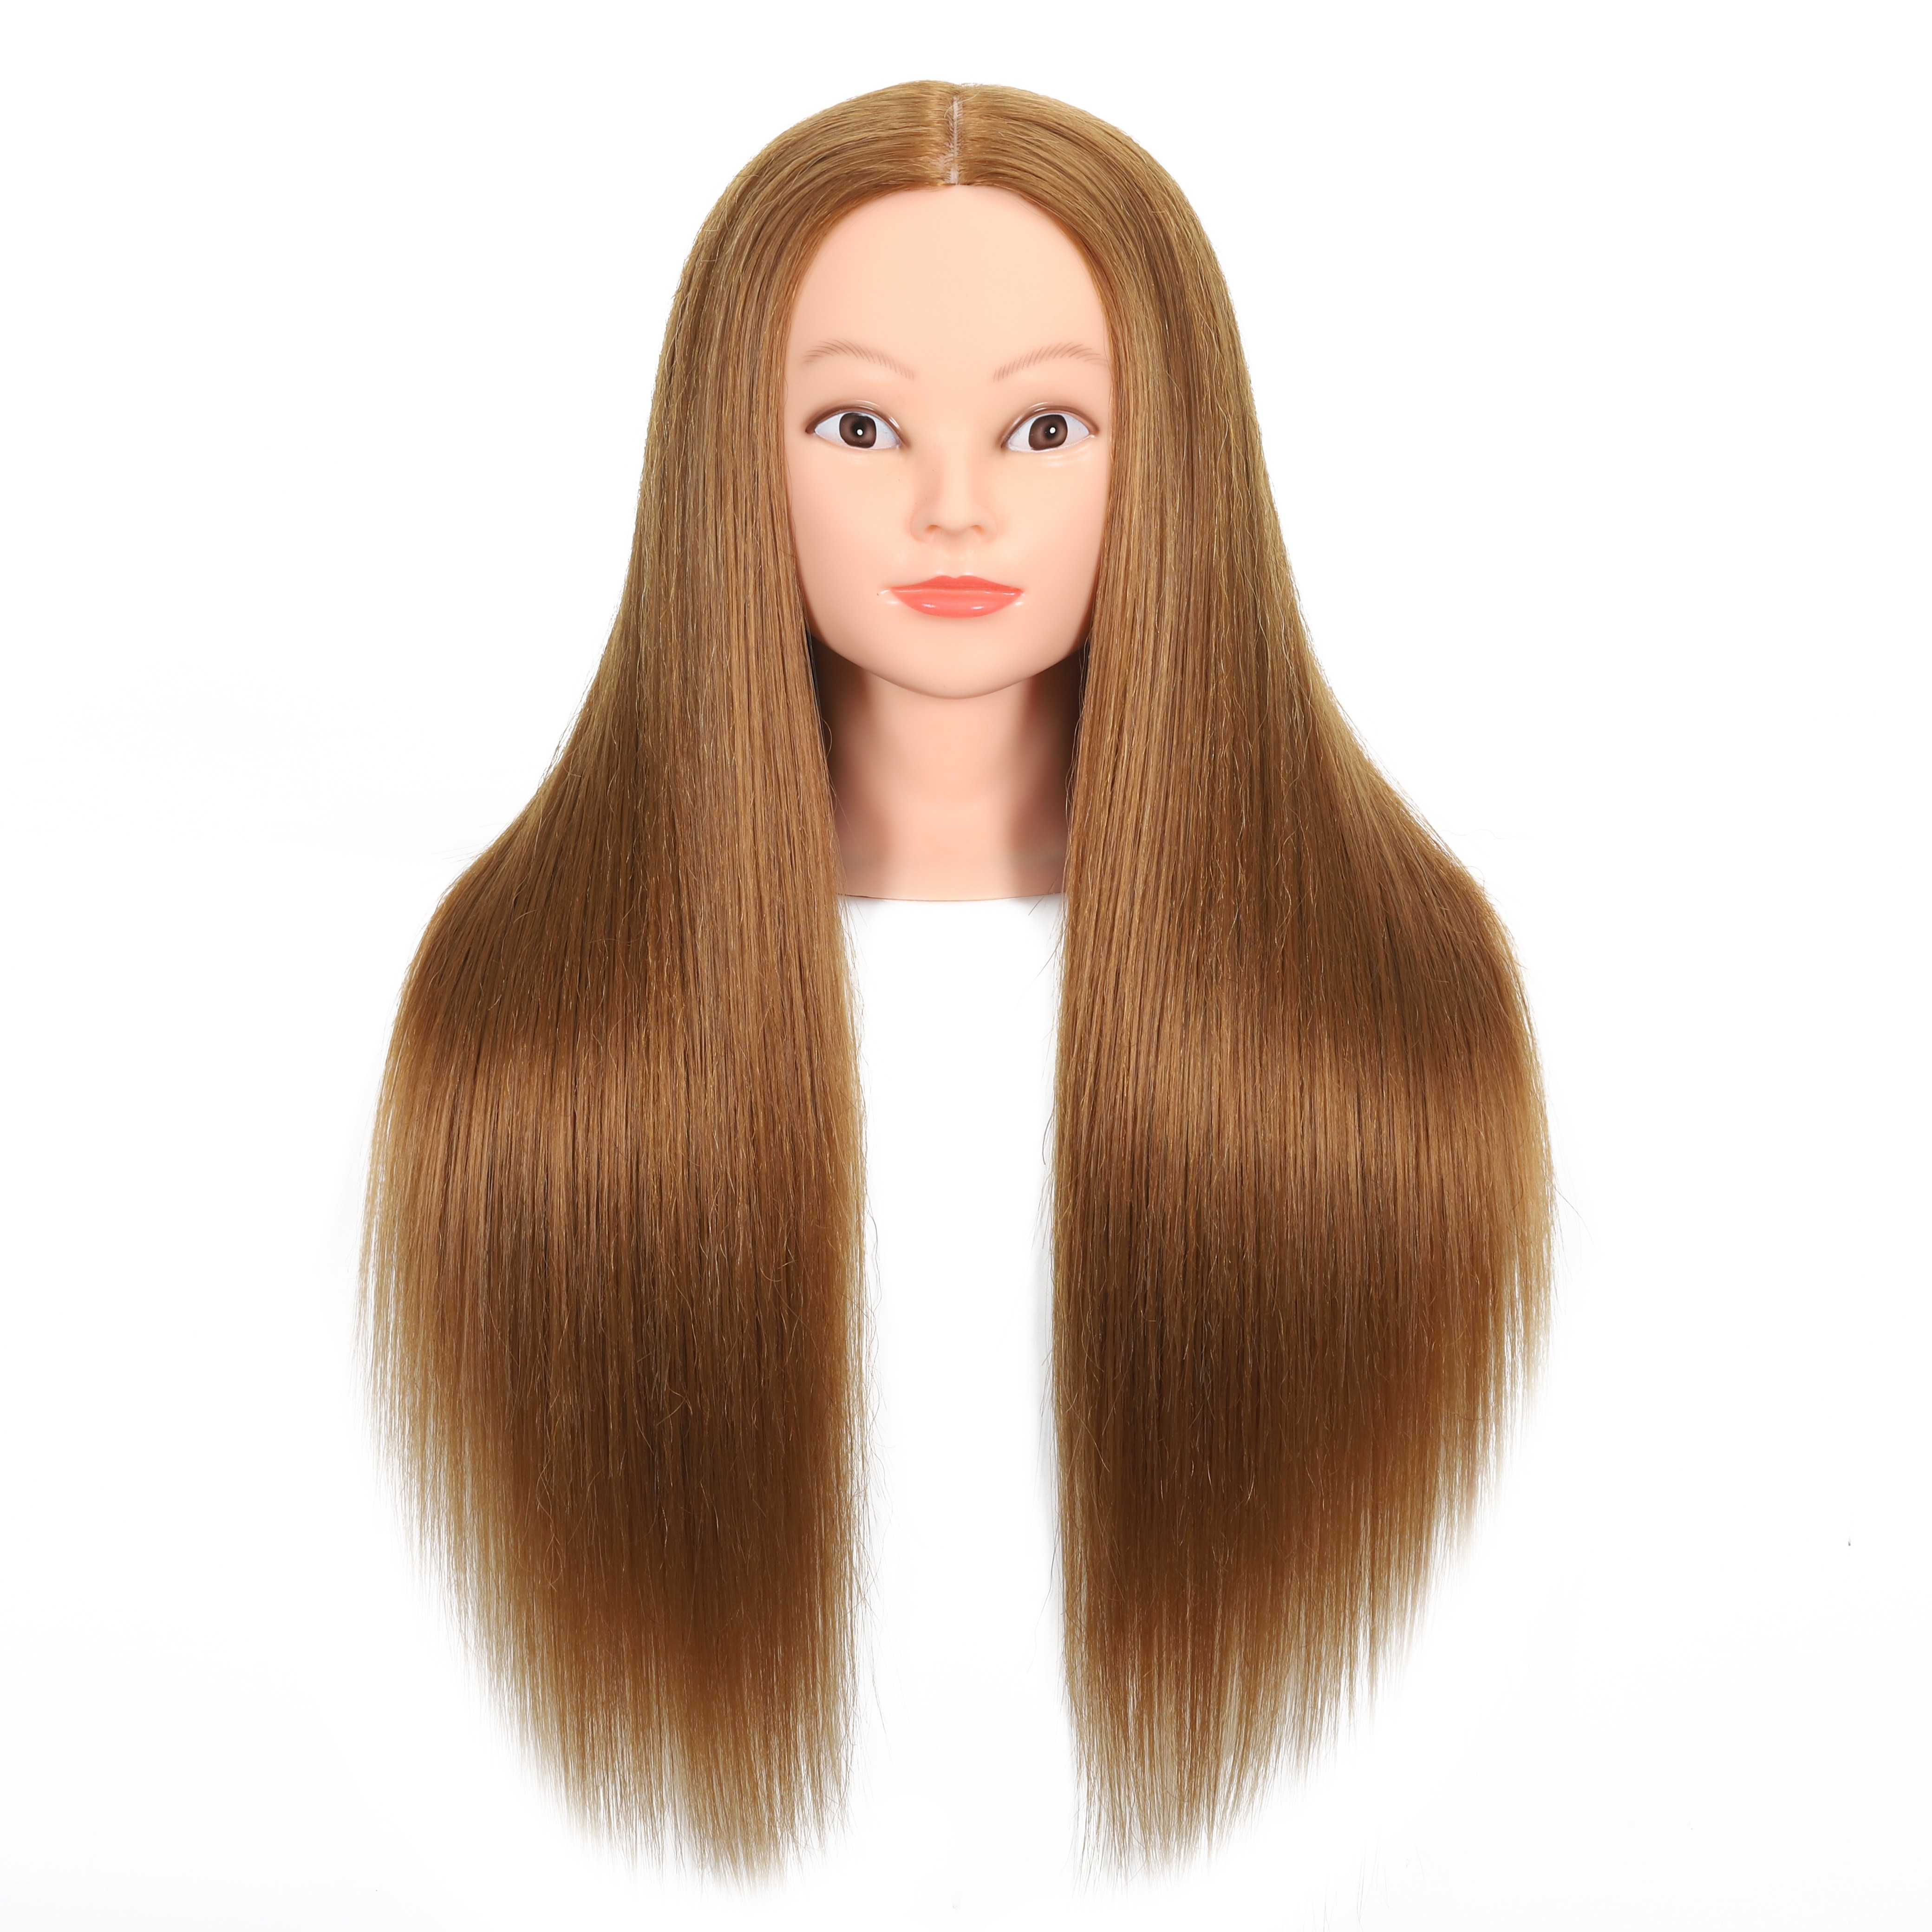 Joedir Wig Stand Wig Head Mannequin Doll Head For Wigs Mannequin Heads  Magic & Joedir Hair, South Africa